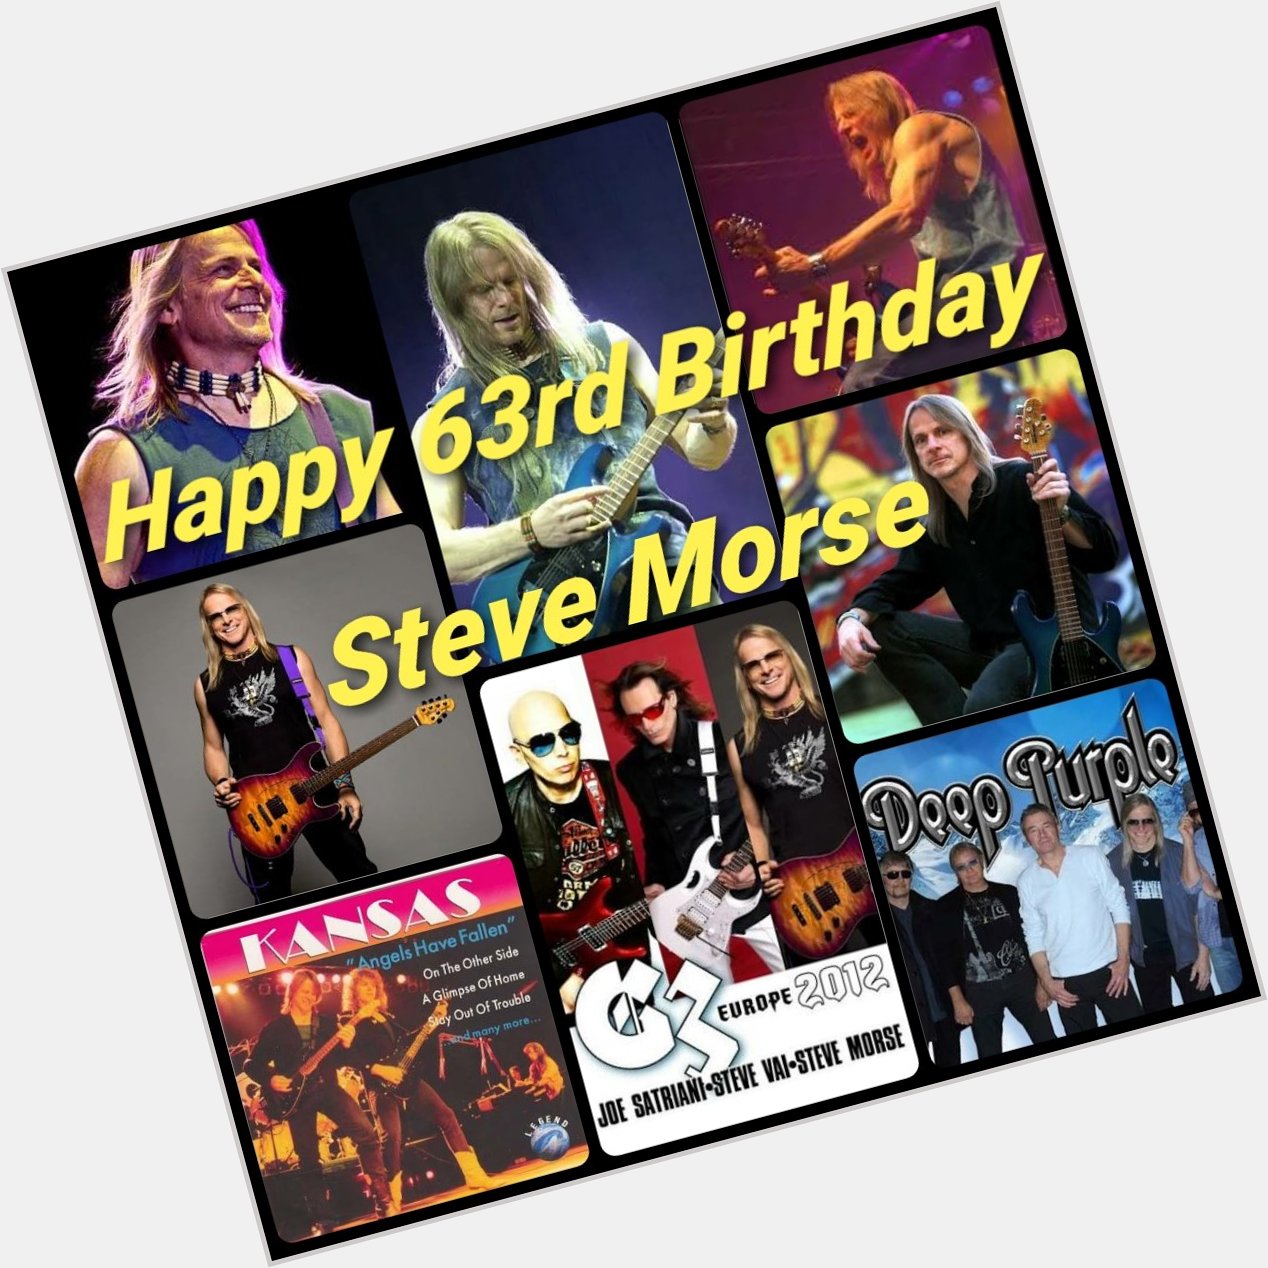 Happy 63rd Birthday Steve Morse  